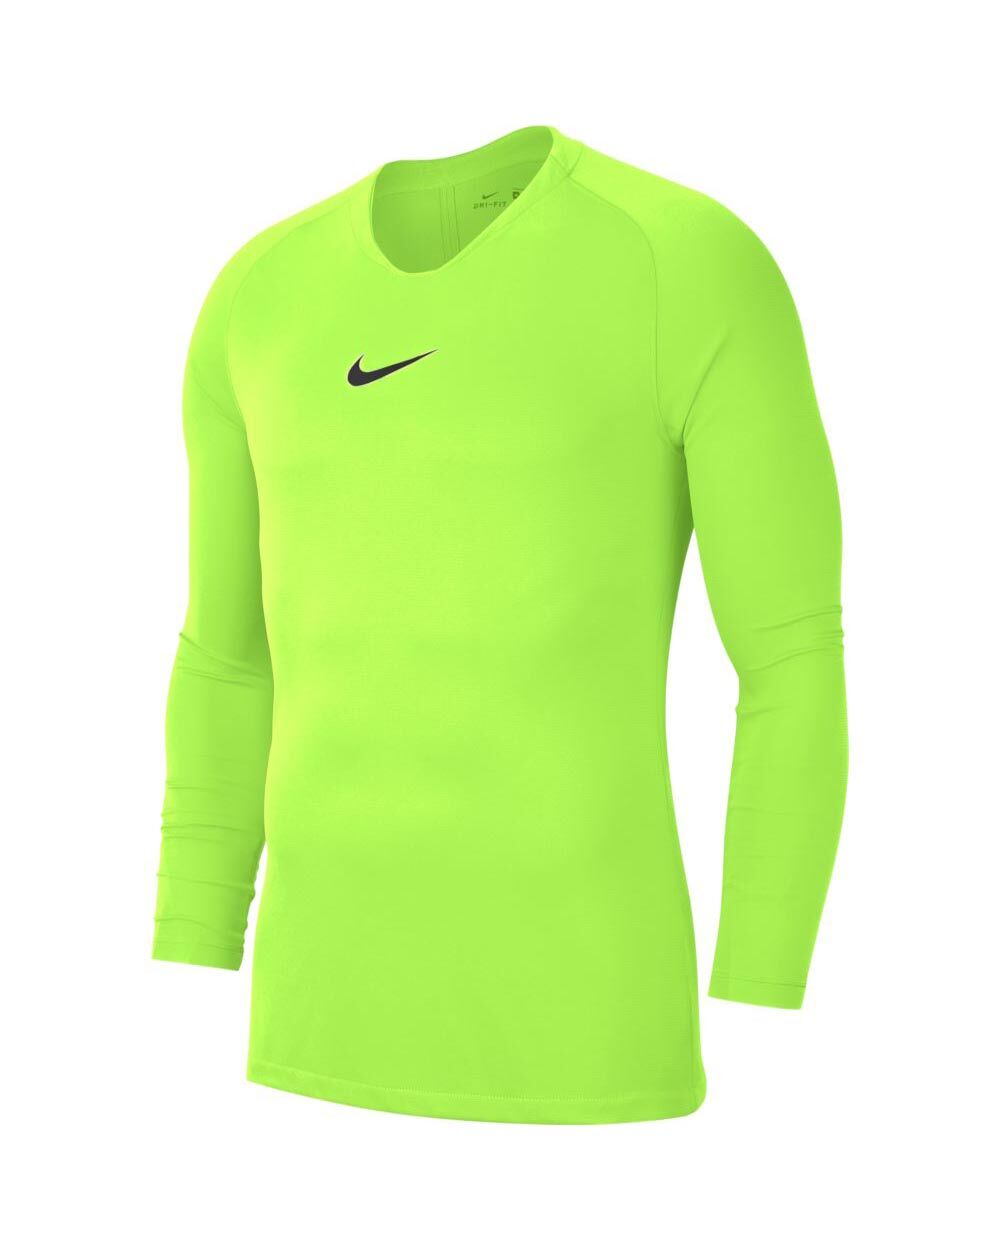 Camiseta interior Nike Park First Layer Amarillo Fluorescente para Hombre - AV2609-702